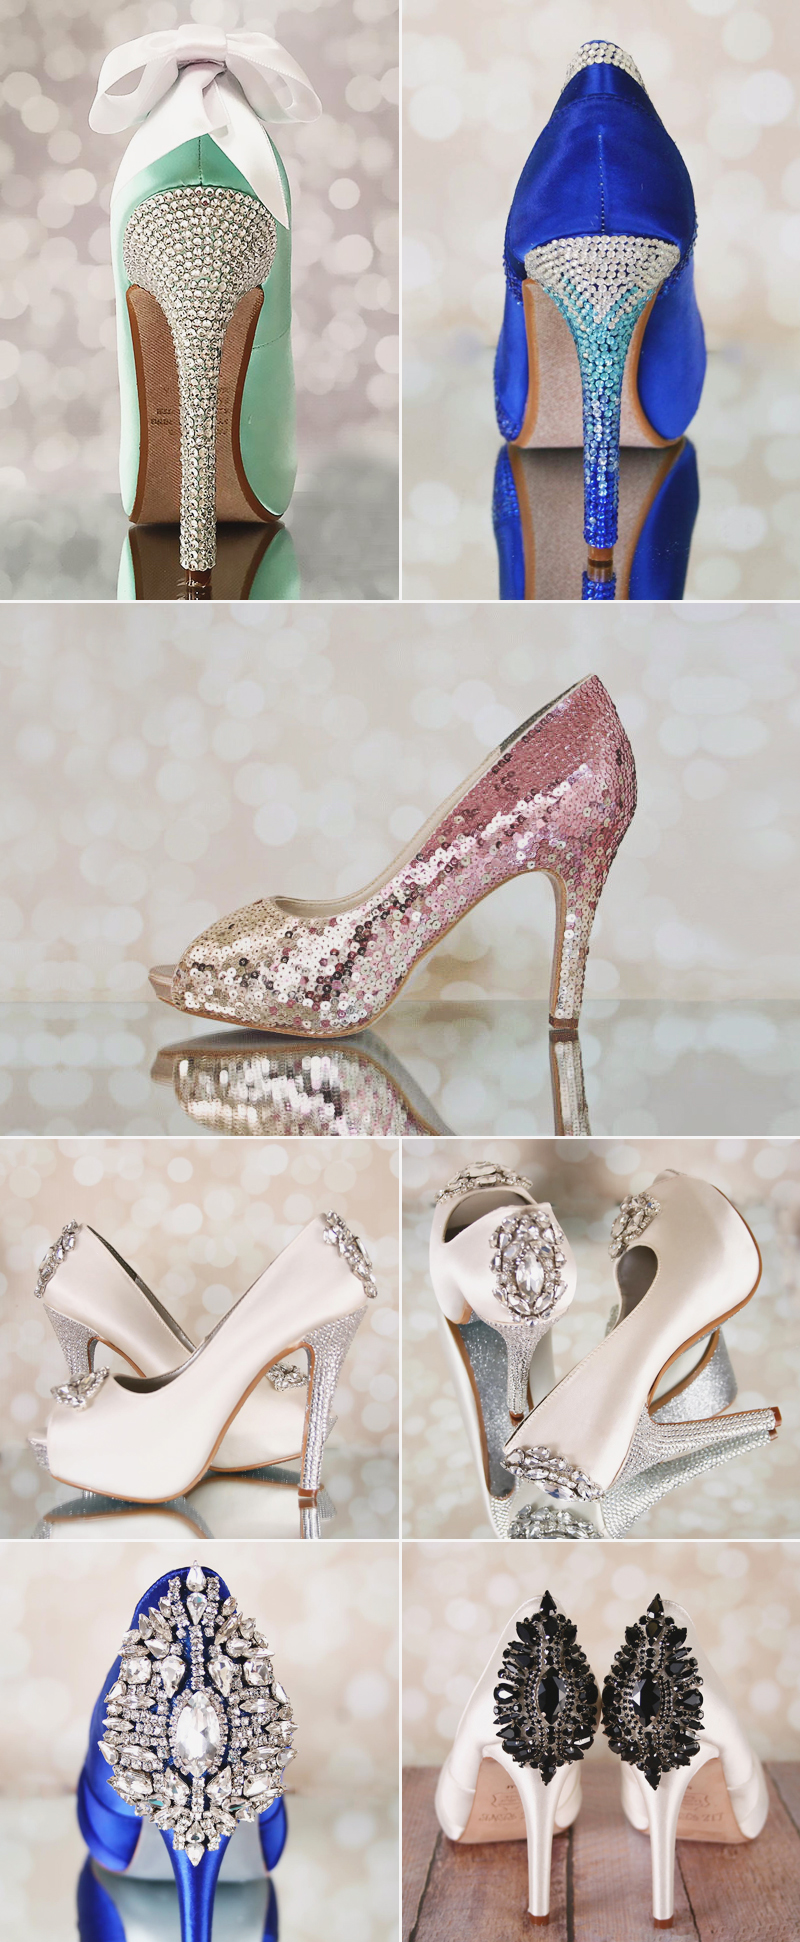 custom wedding shoes for bride